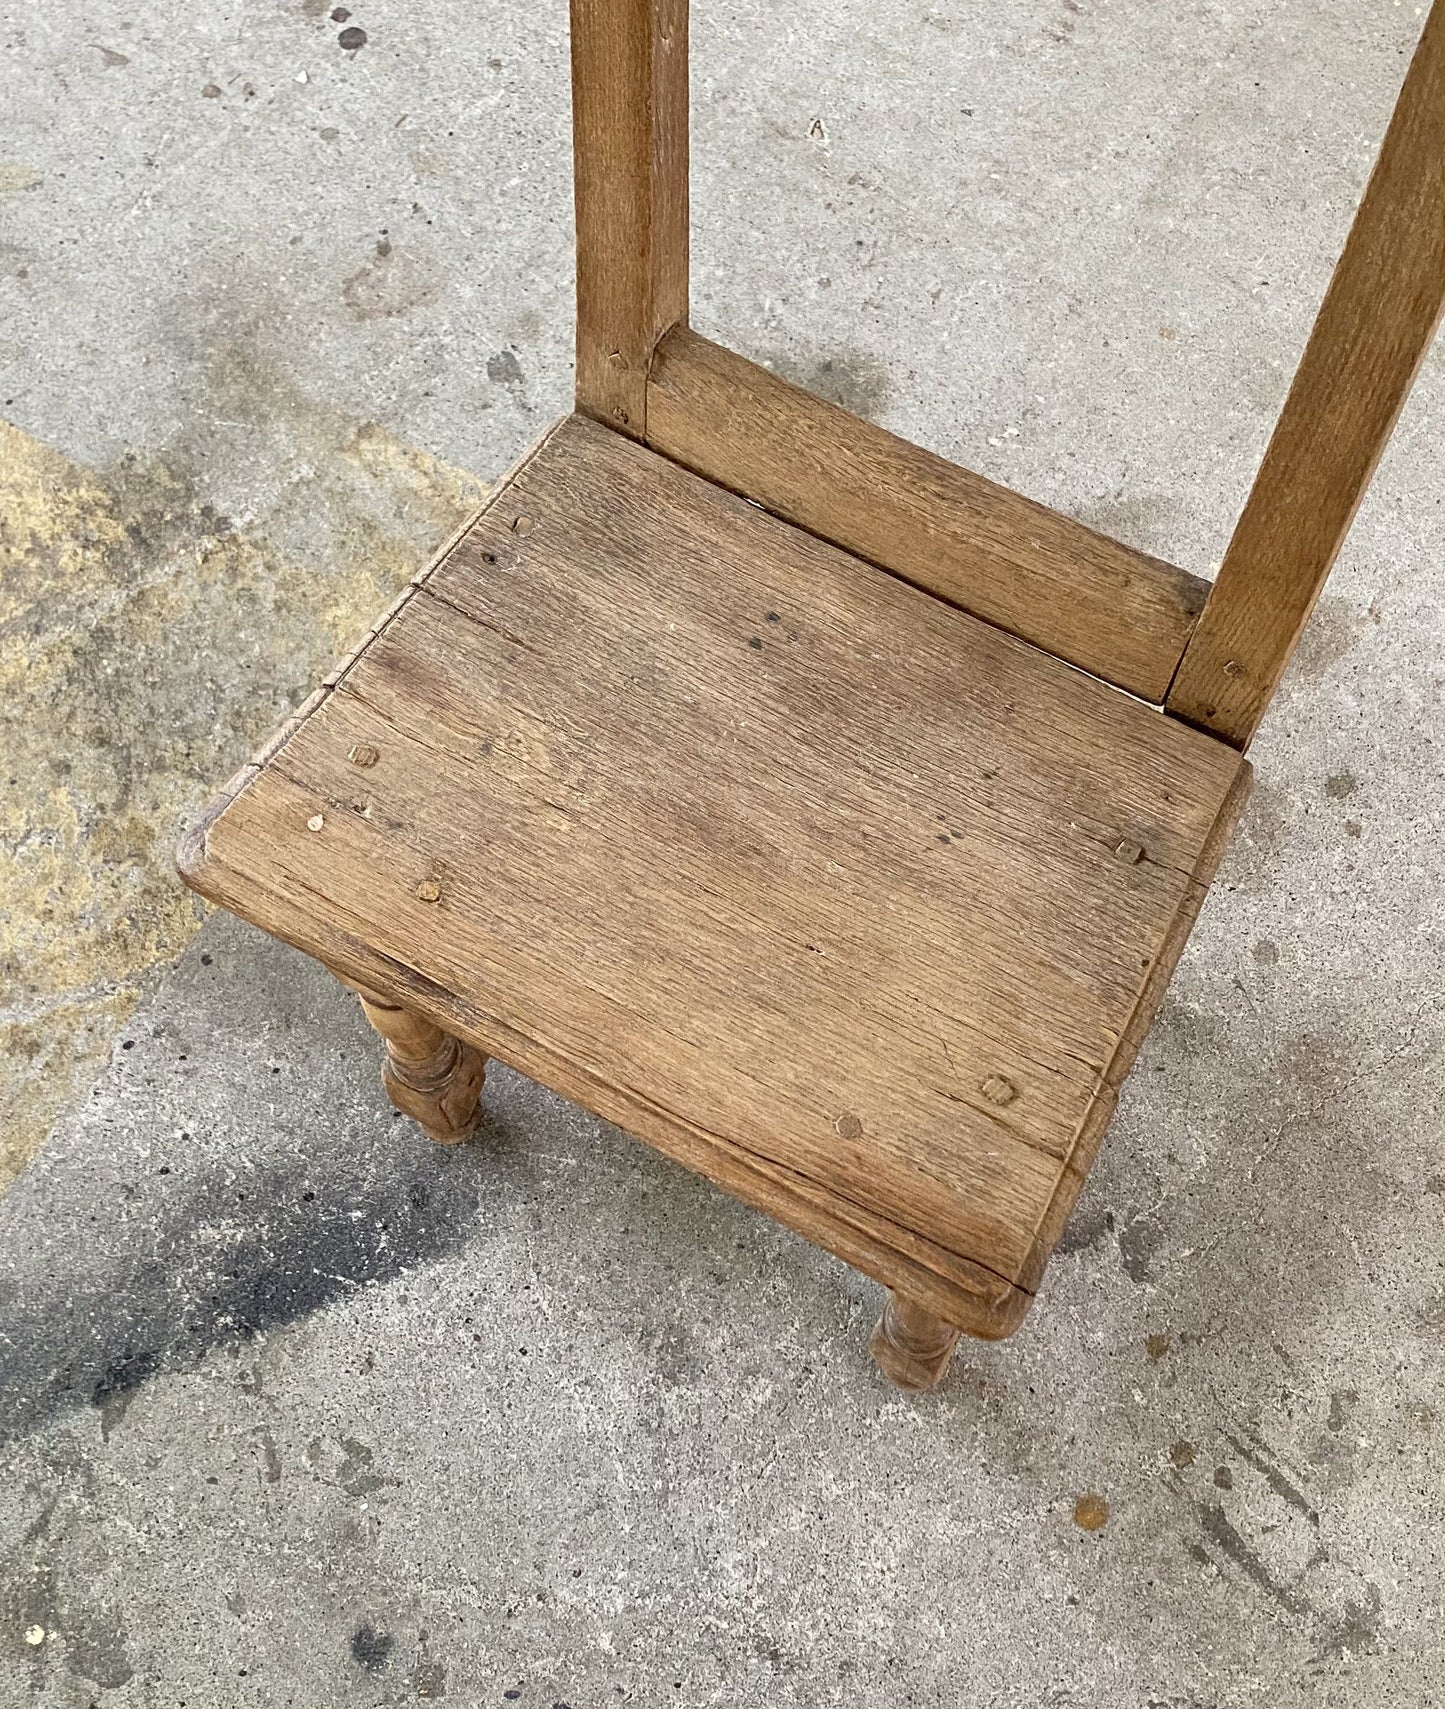 French Oak Chair